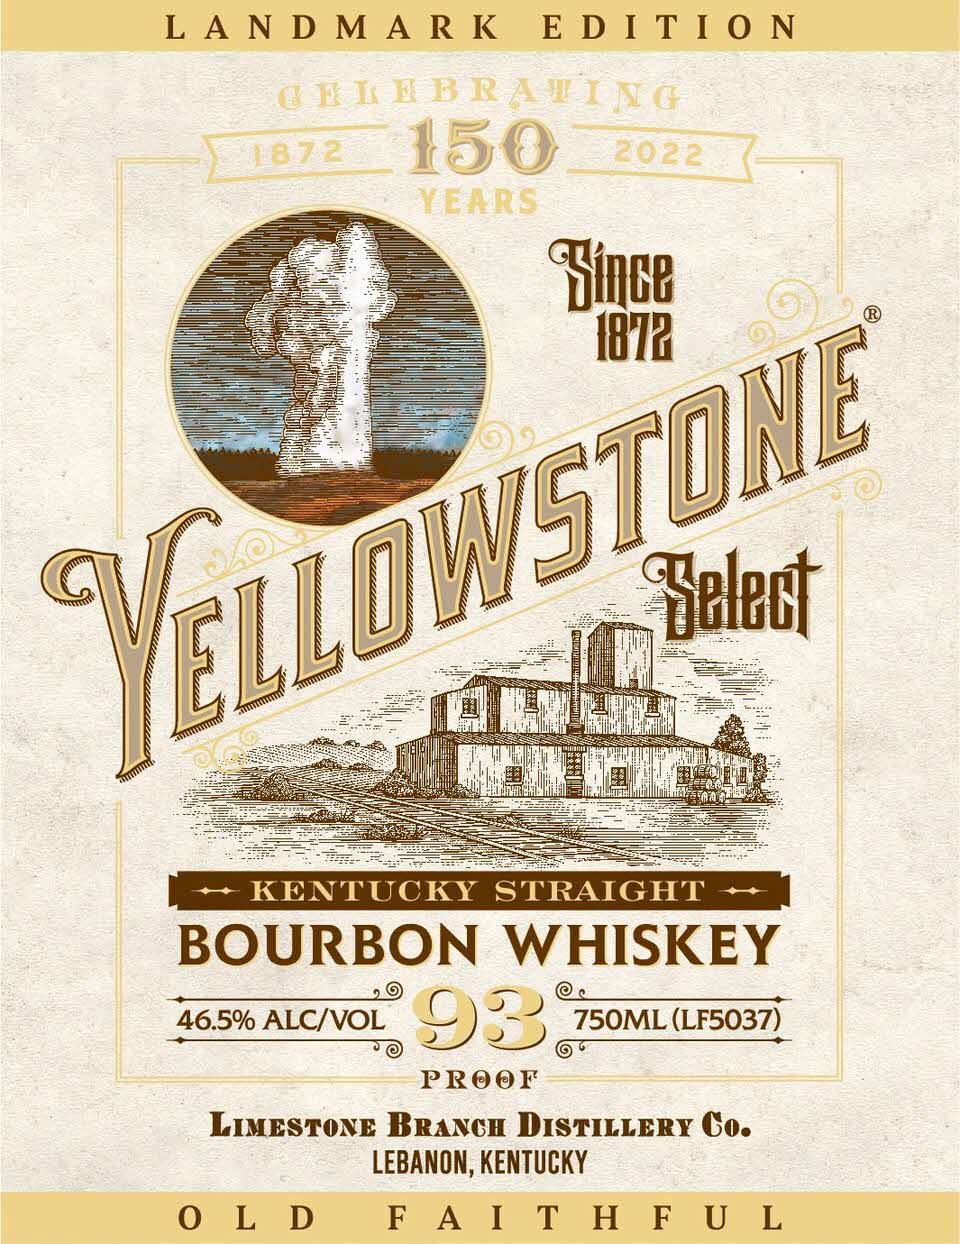 Limestone Branch Distillery - 2 Yellowstone Select Kentucky Straight Bourbon Whiskey, 150 Year Celebration, Old Faithful Label